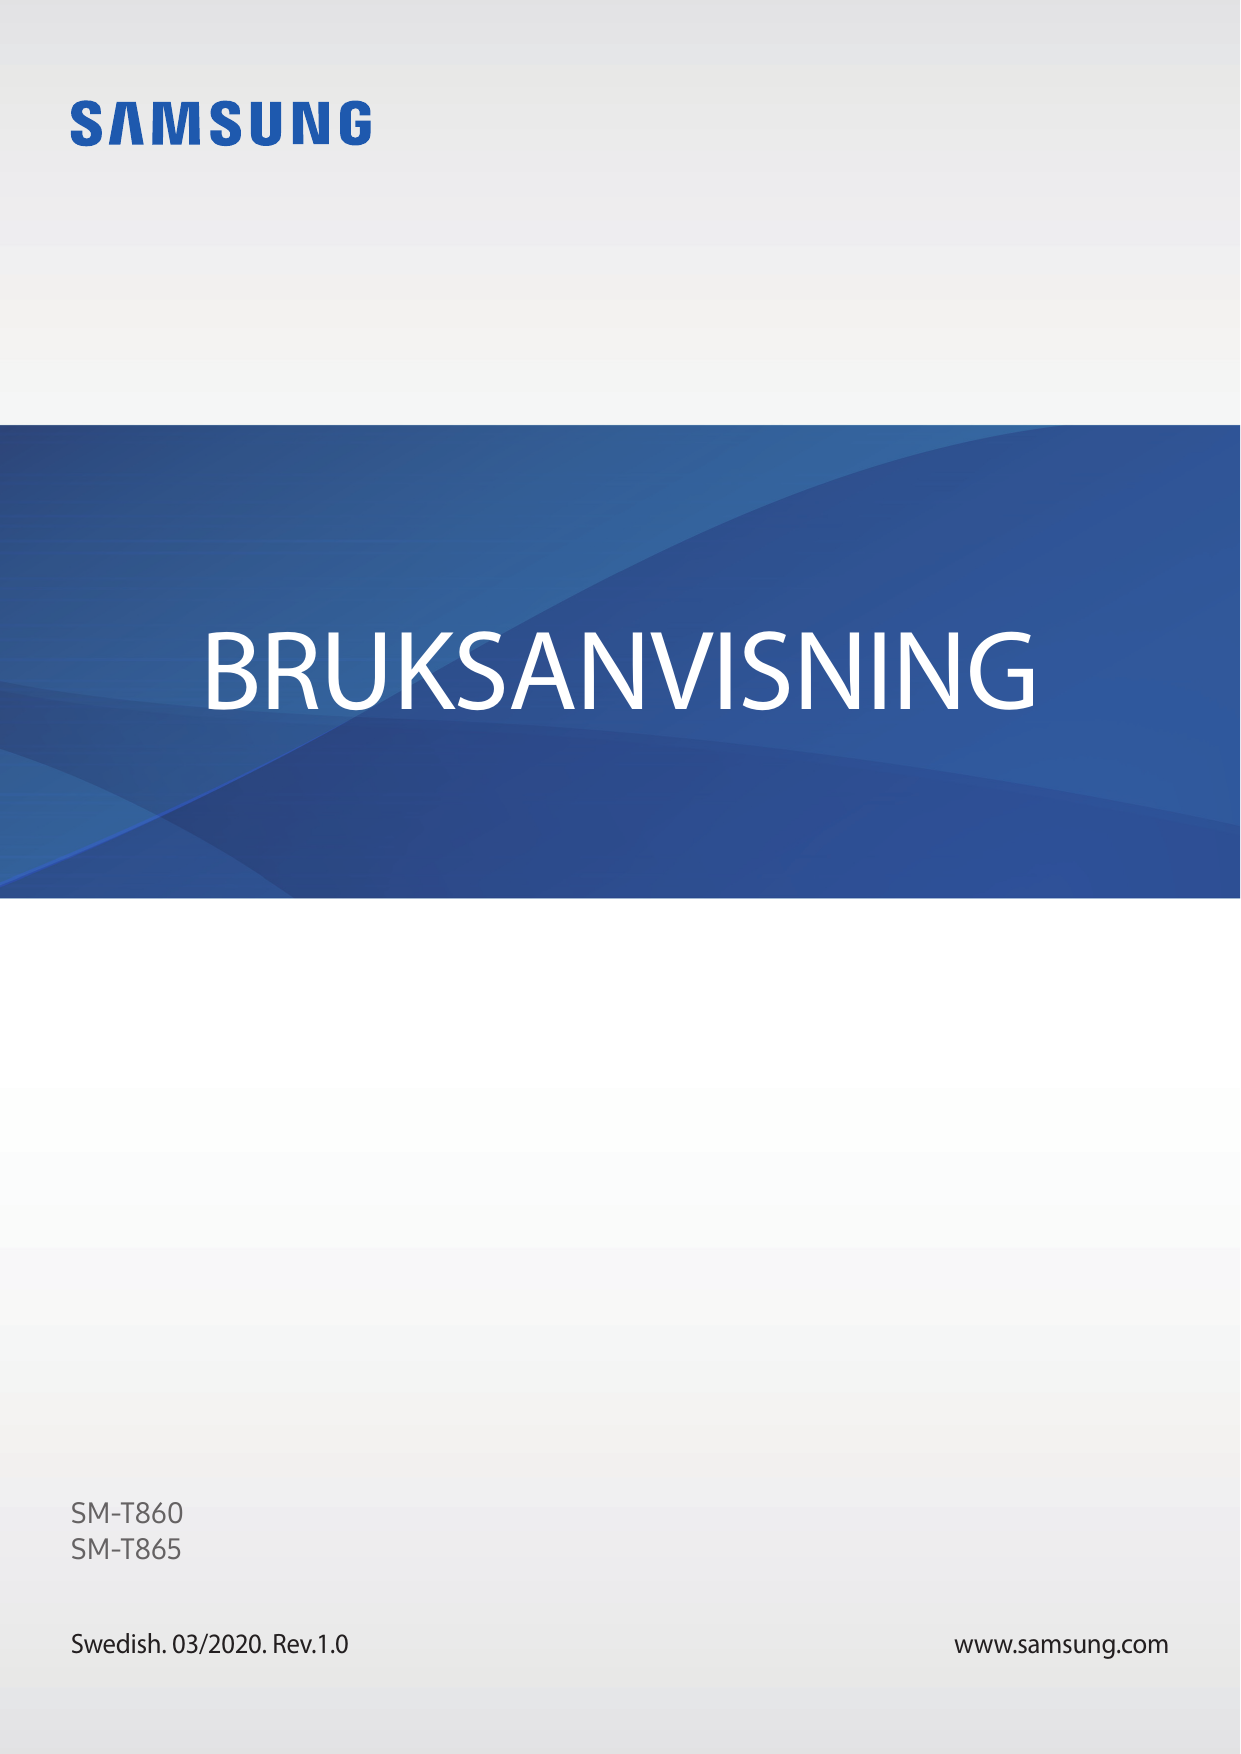 BRUKSANVISNINGSM-T860SM-T865Swedish. 03/2020. Rev.1.0www.samsung.com